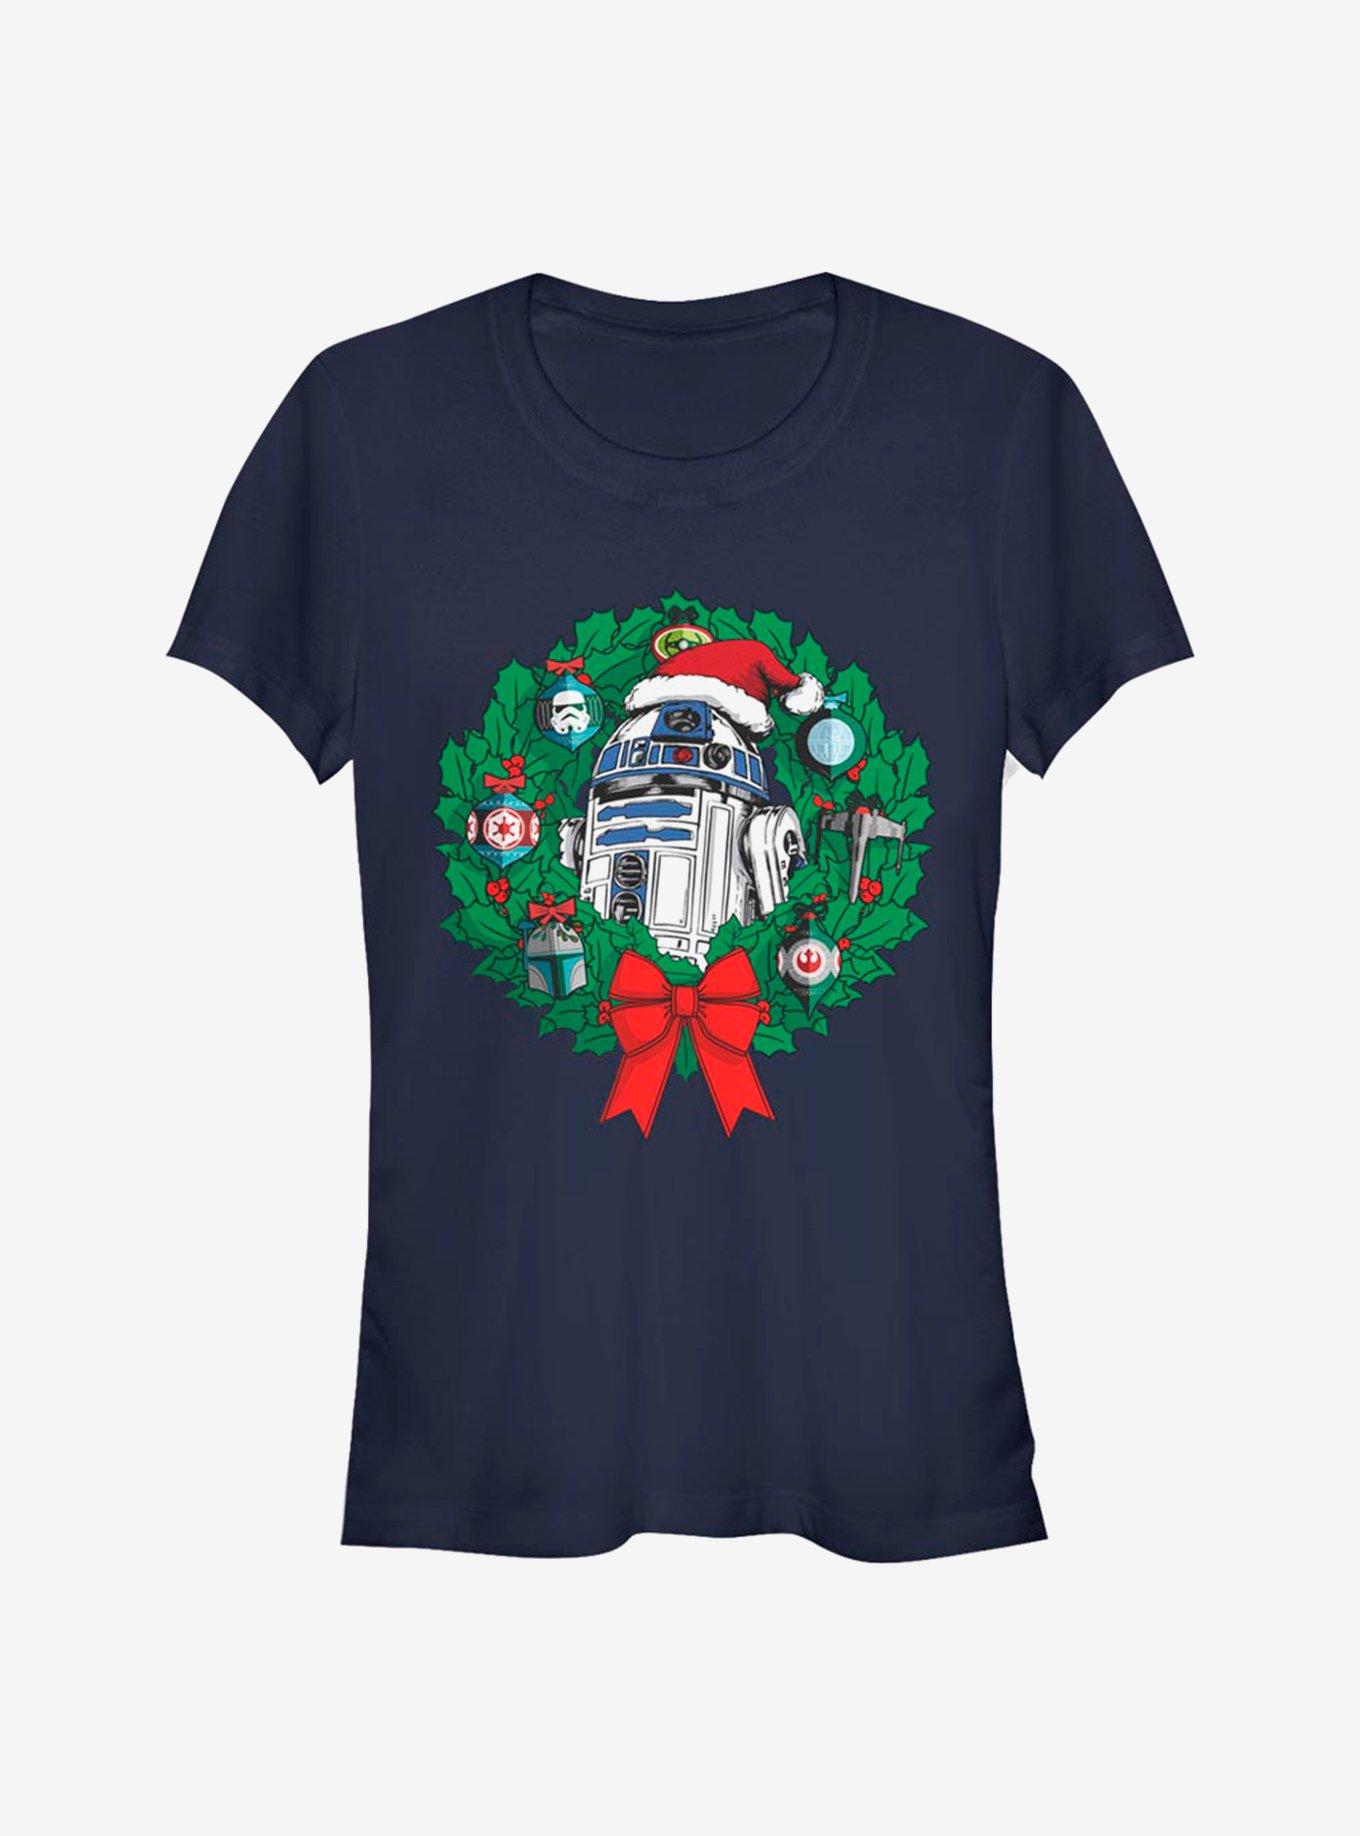 Star Wars Ornament Wreath Girls T-Shirt